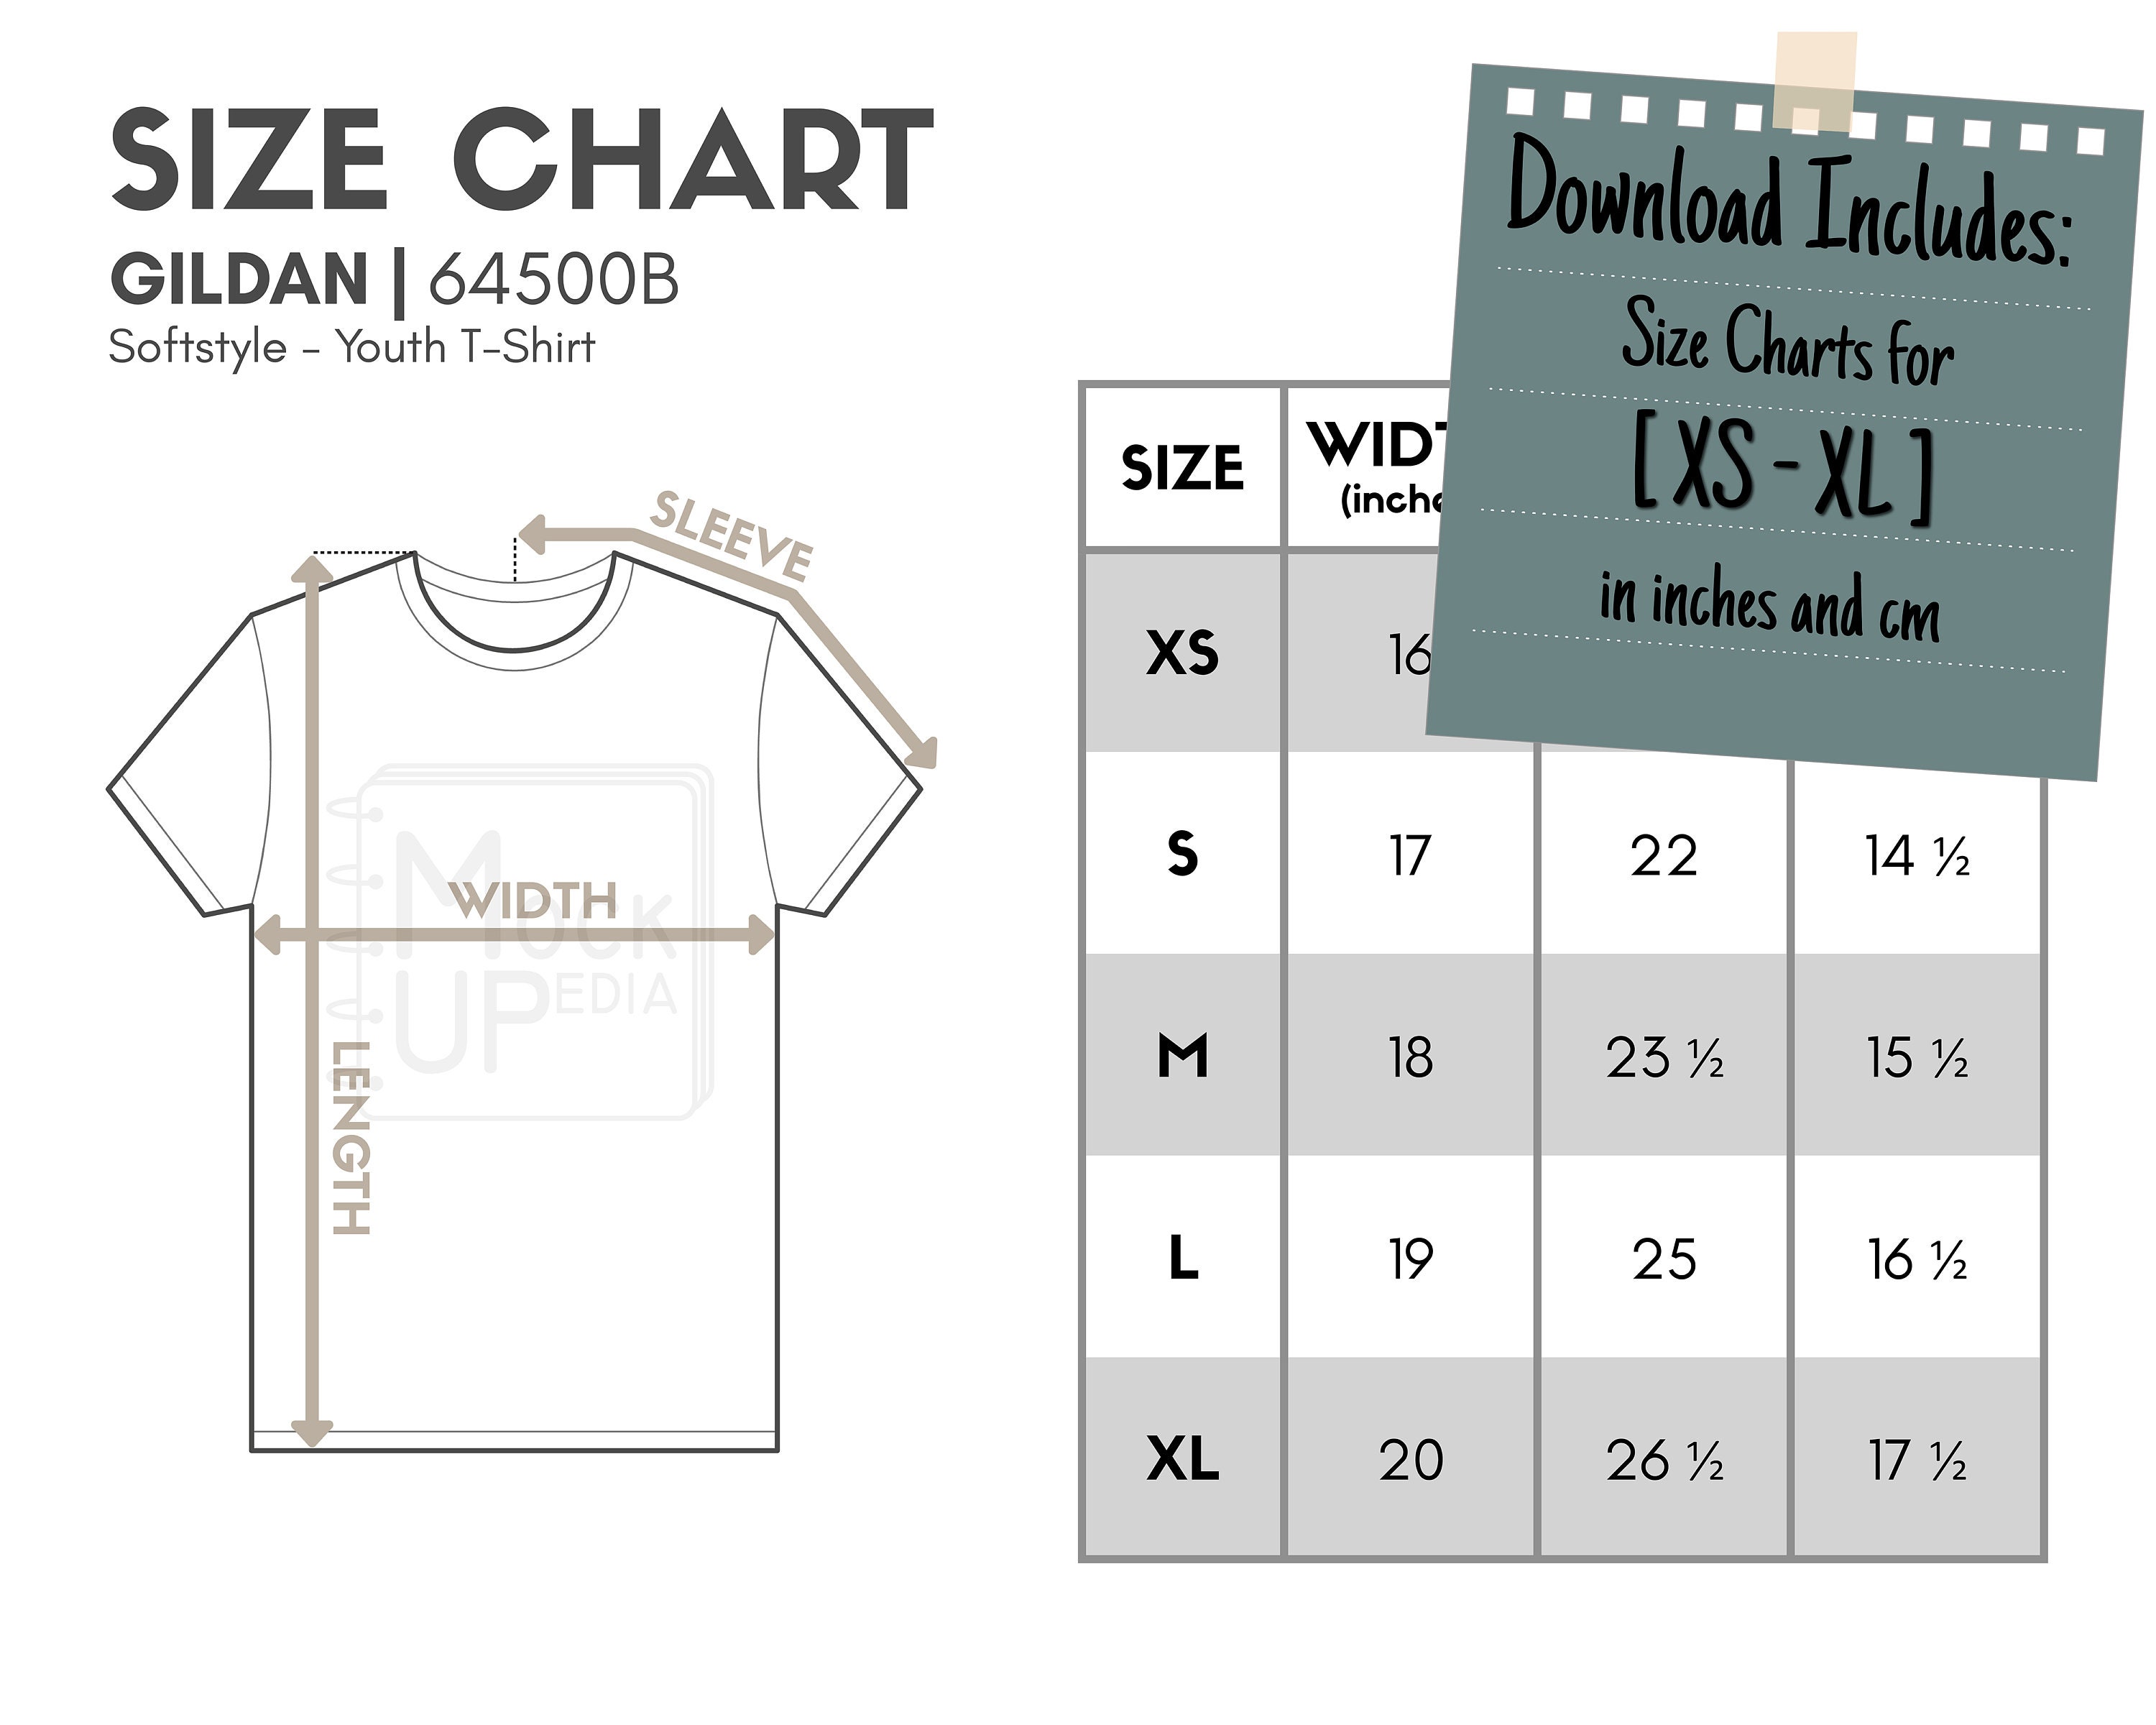 Gildan 64500B Youth T-shirt Size Chart inches/cm Digital Size Chart ...